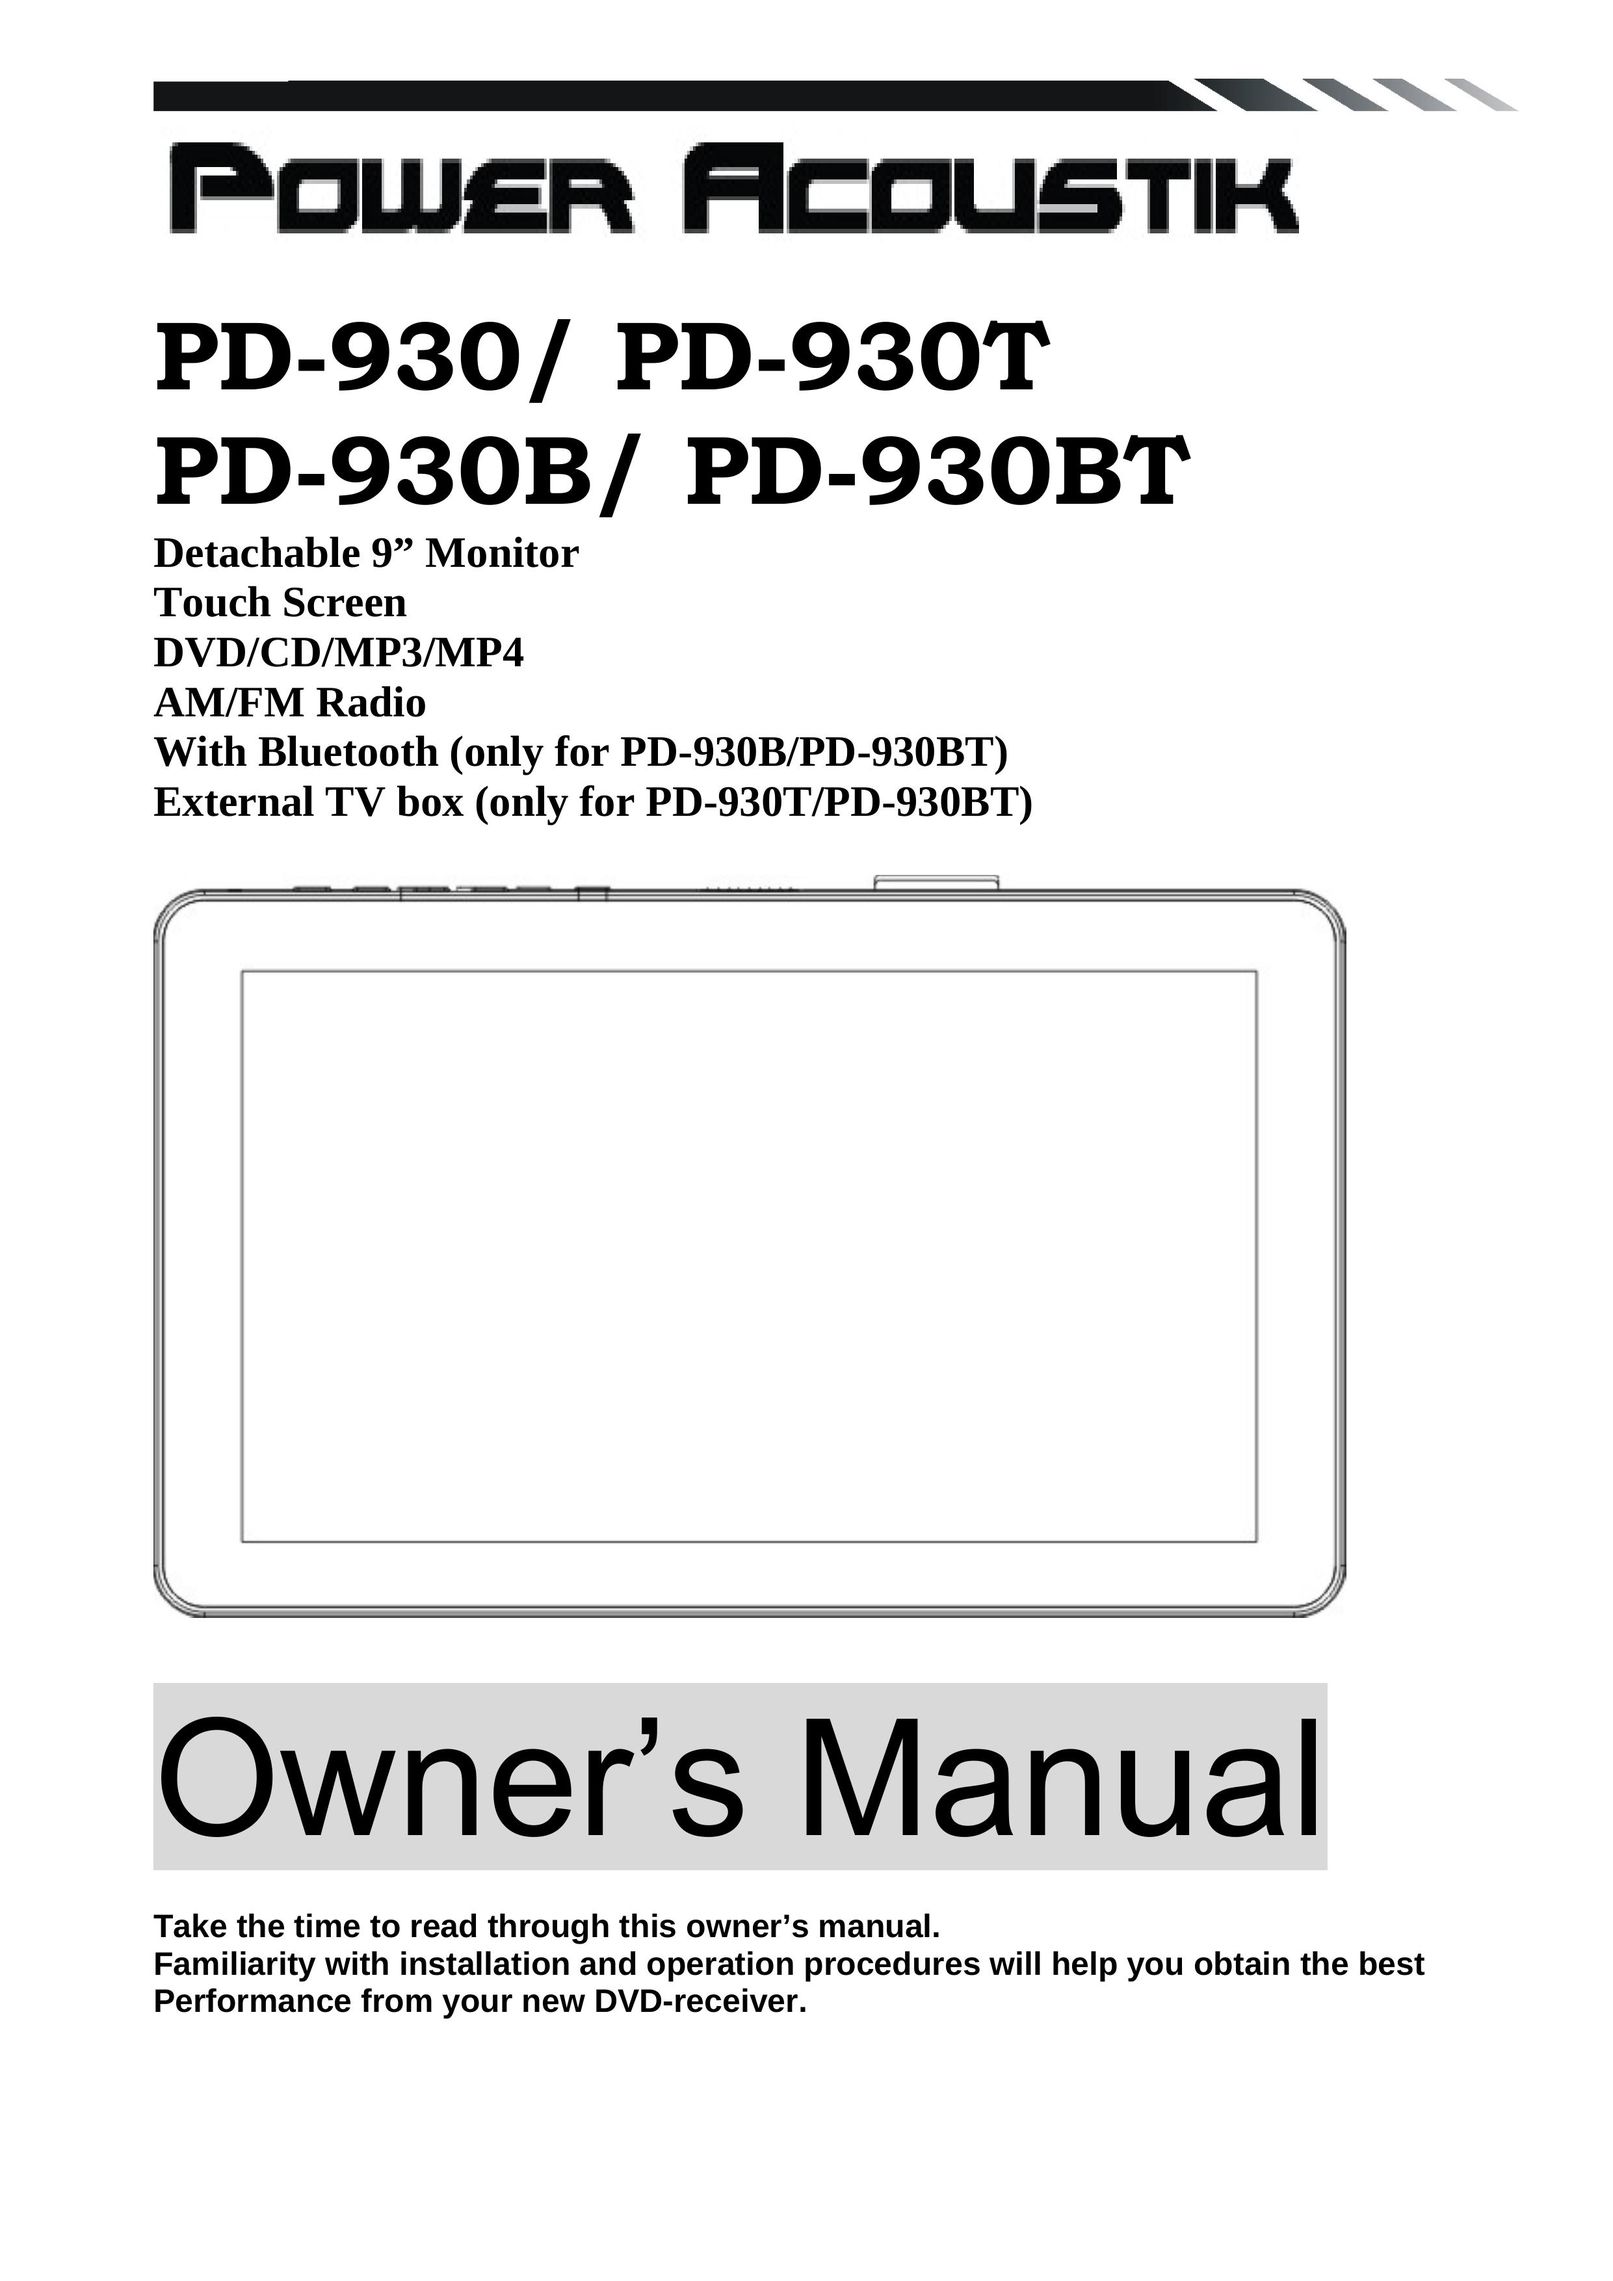 Power Acoustik PD-930T Car Video System User Manual